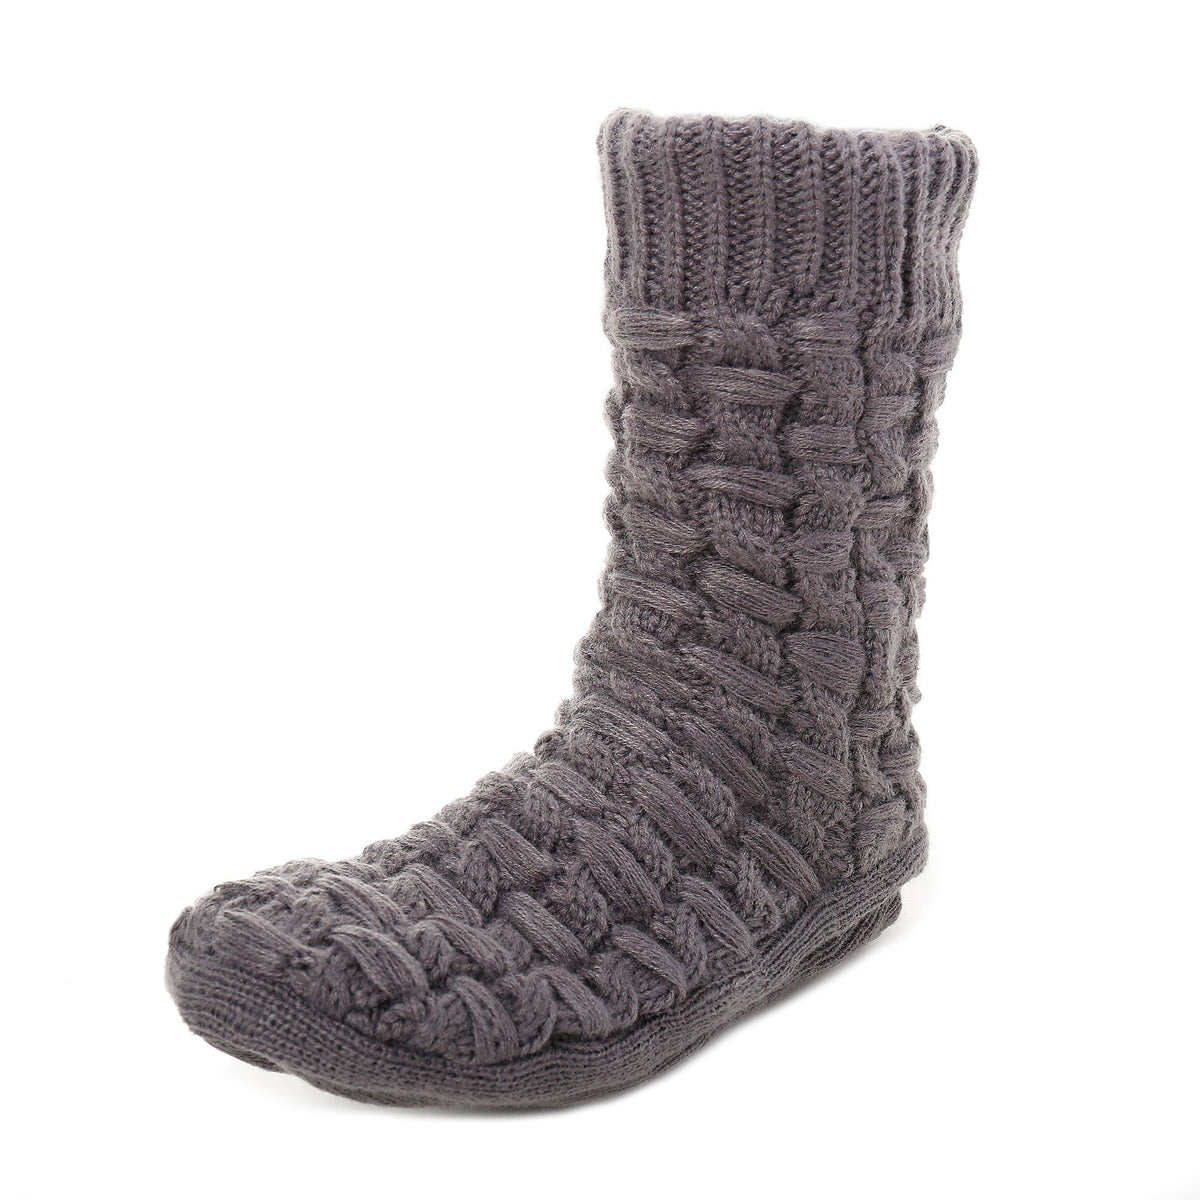 Men's Thick Basket Weave No-Skid Slipper Socks - Grey